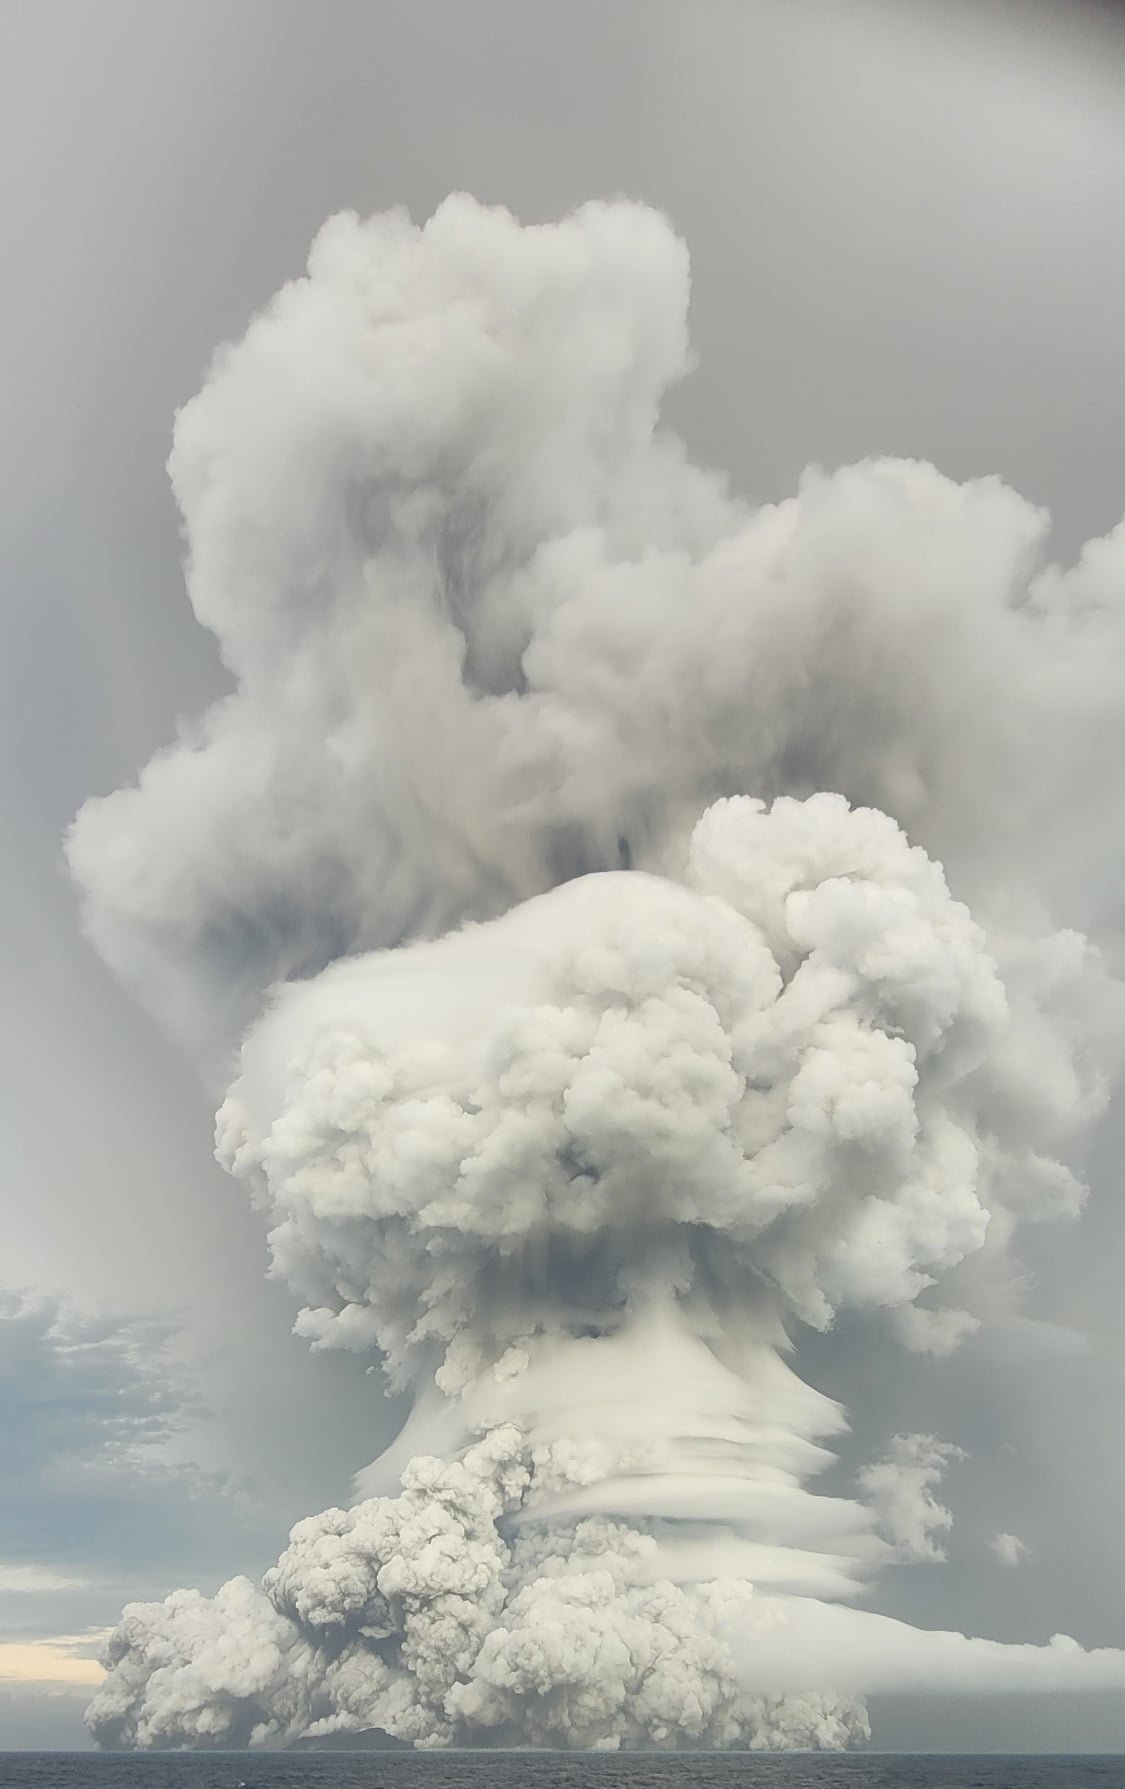 Vigorous eruption from Hunga Tonga-Hunga Ha'apai volcano yesterday (image: Tonga Geological Services/facebook)